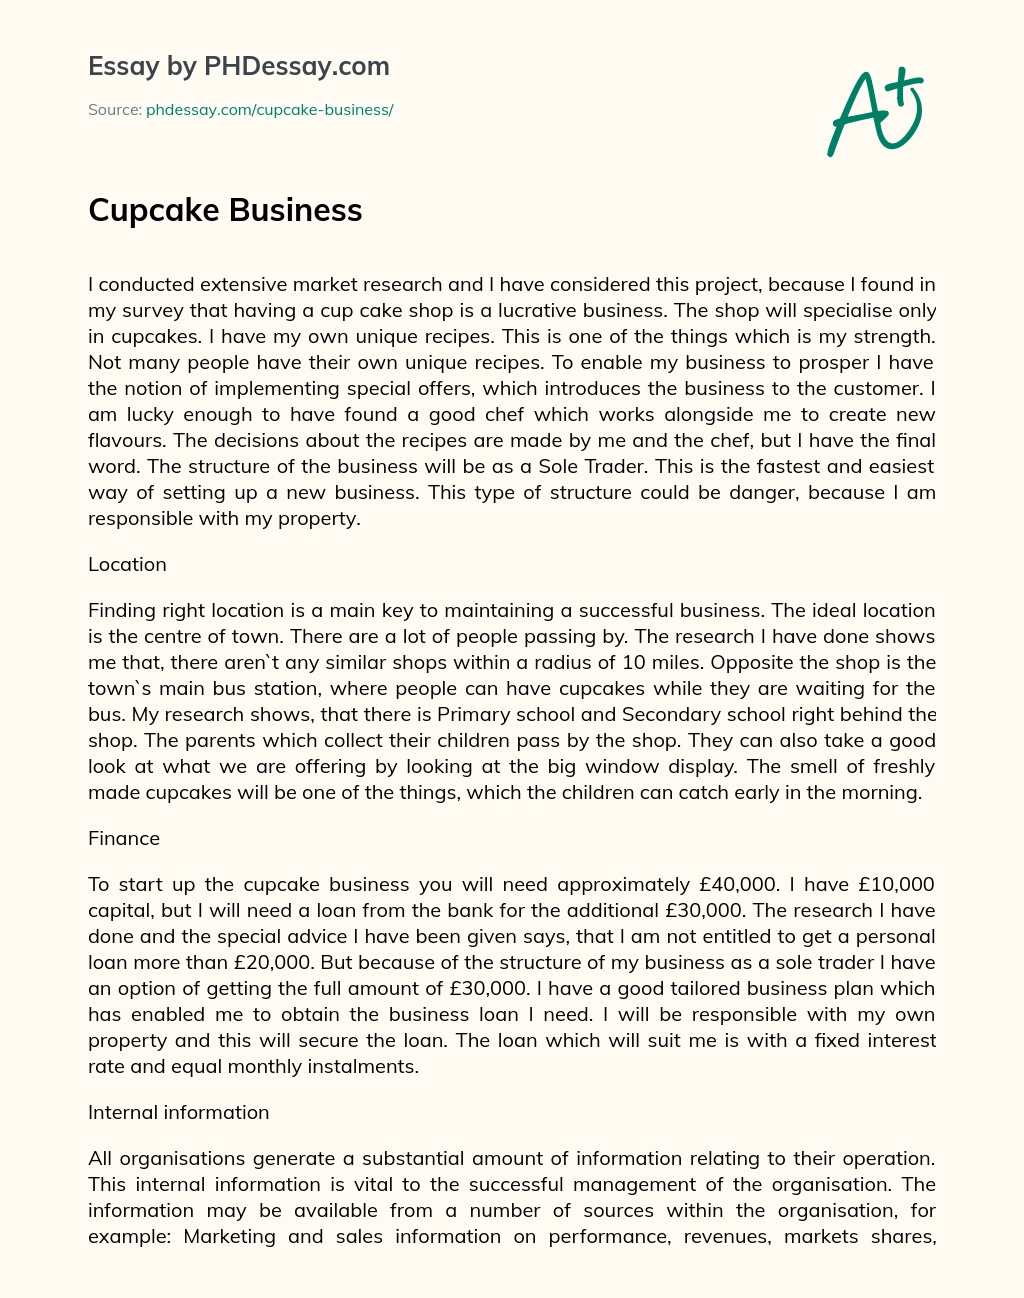 Cupcake Business essay